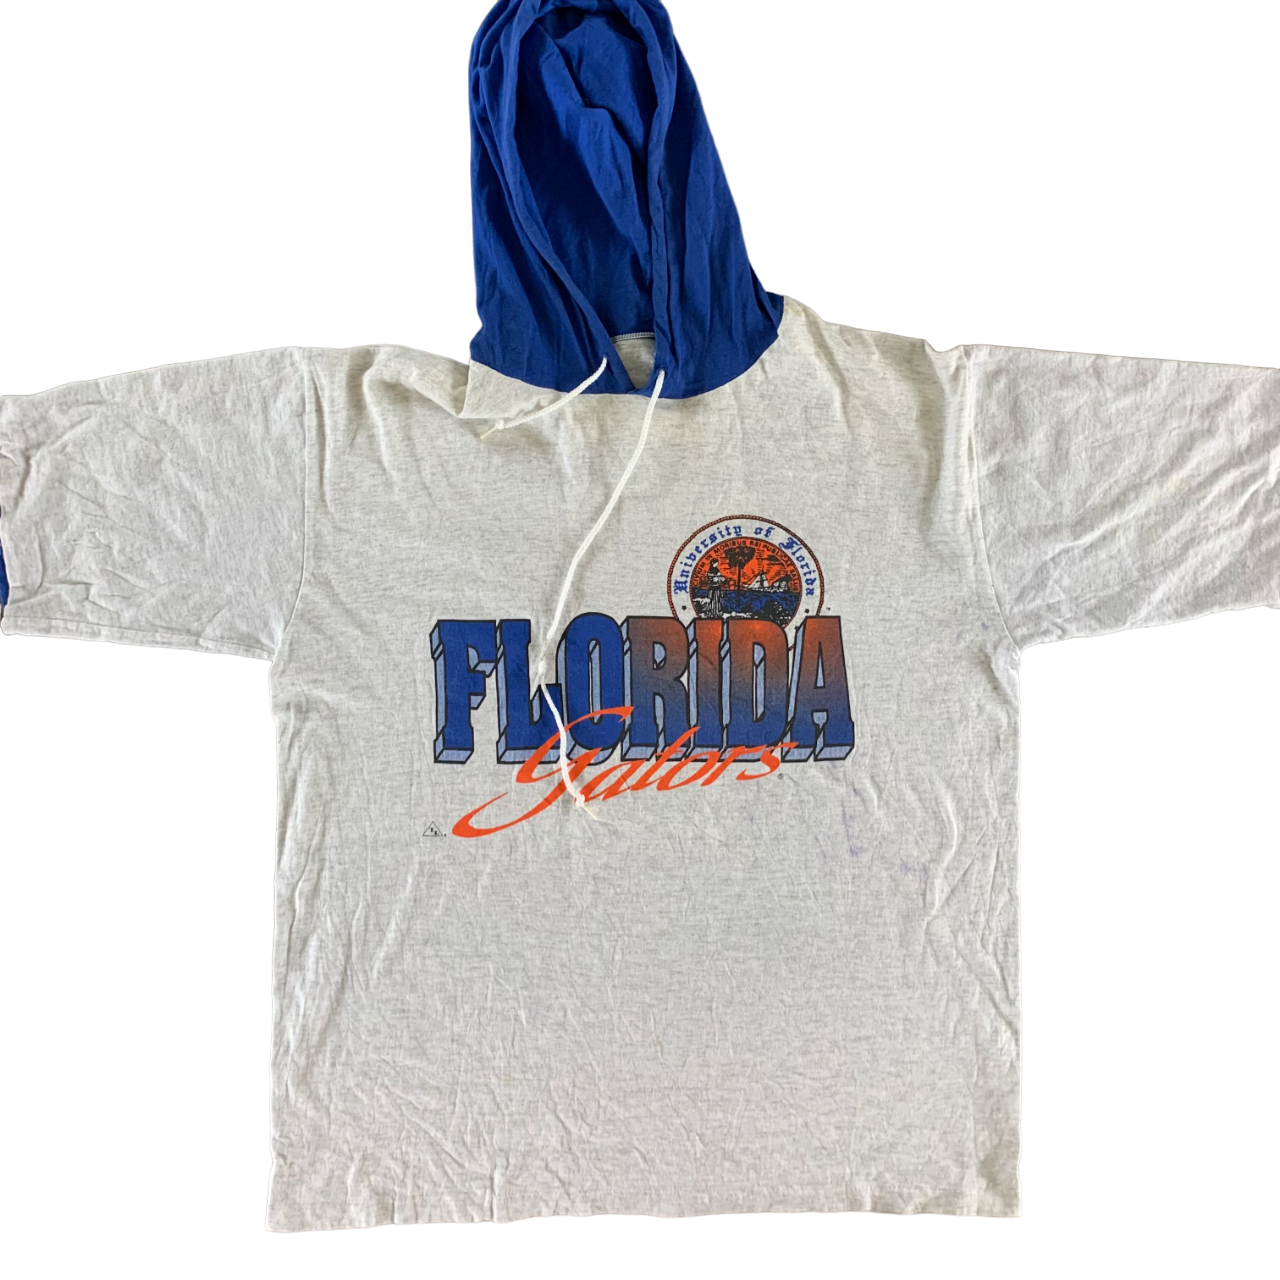 Vintage 1990s University of Florida T-shirt size XL